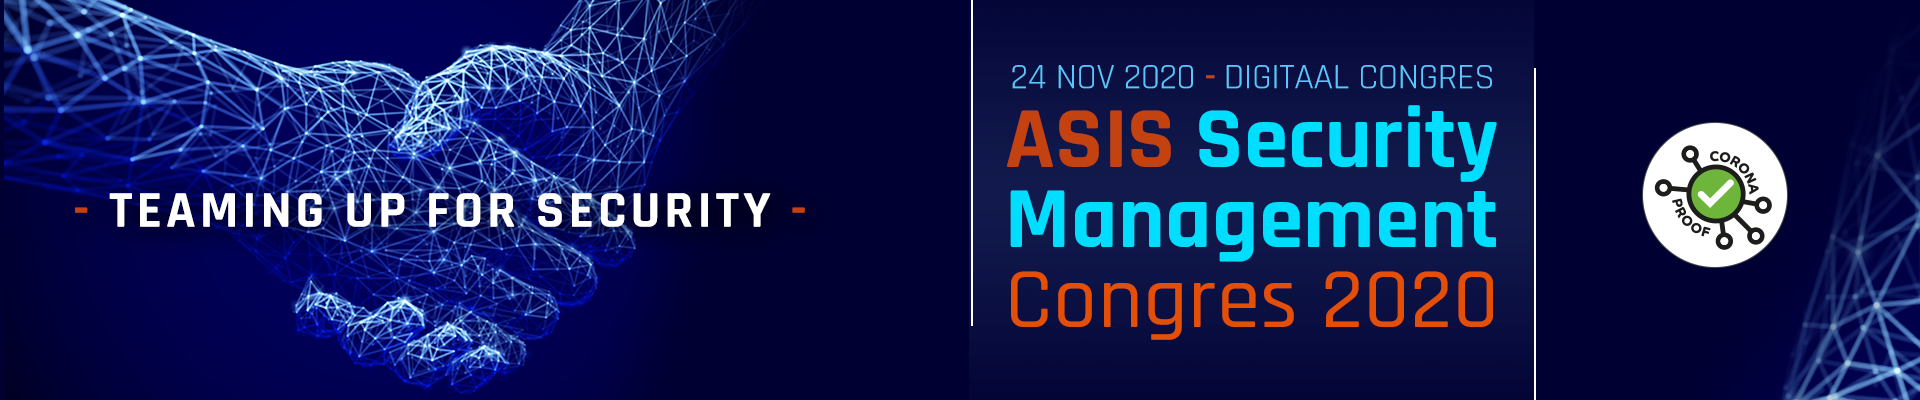 ASIS Security Management Congres 2020